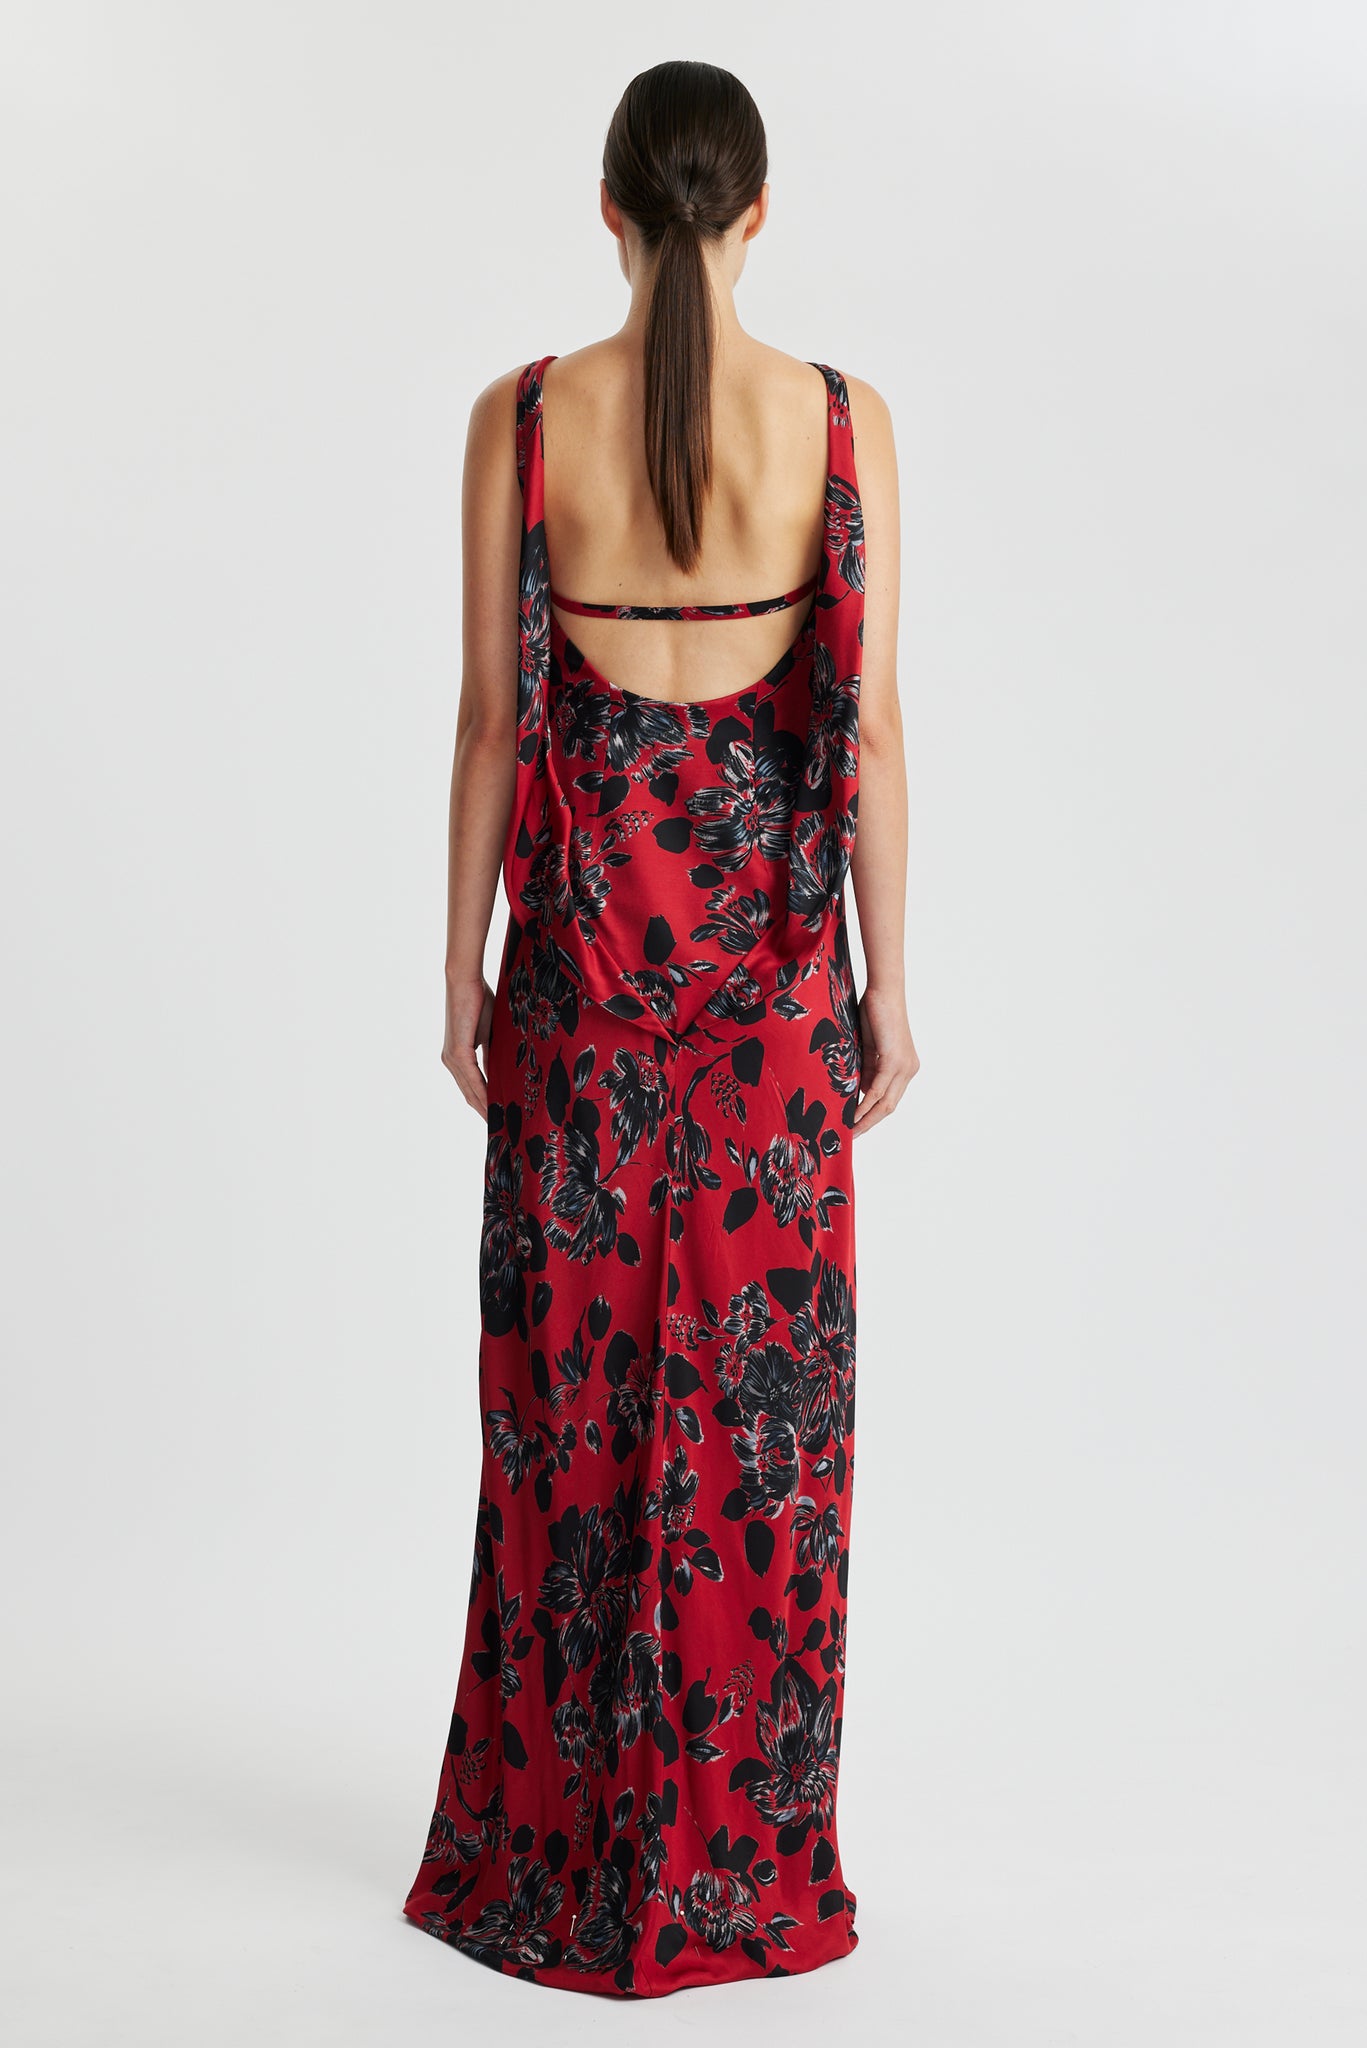 Nefeli Dress In Black Floral Printed Twill | Emilia Wickstead